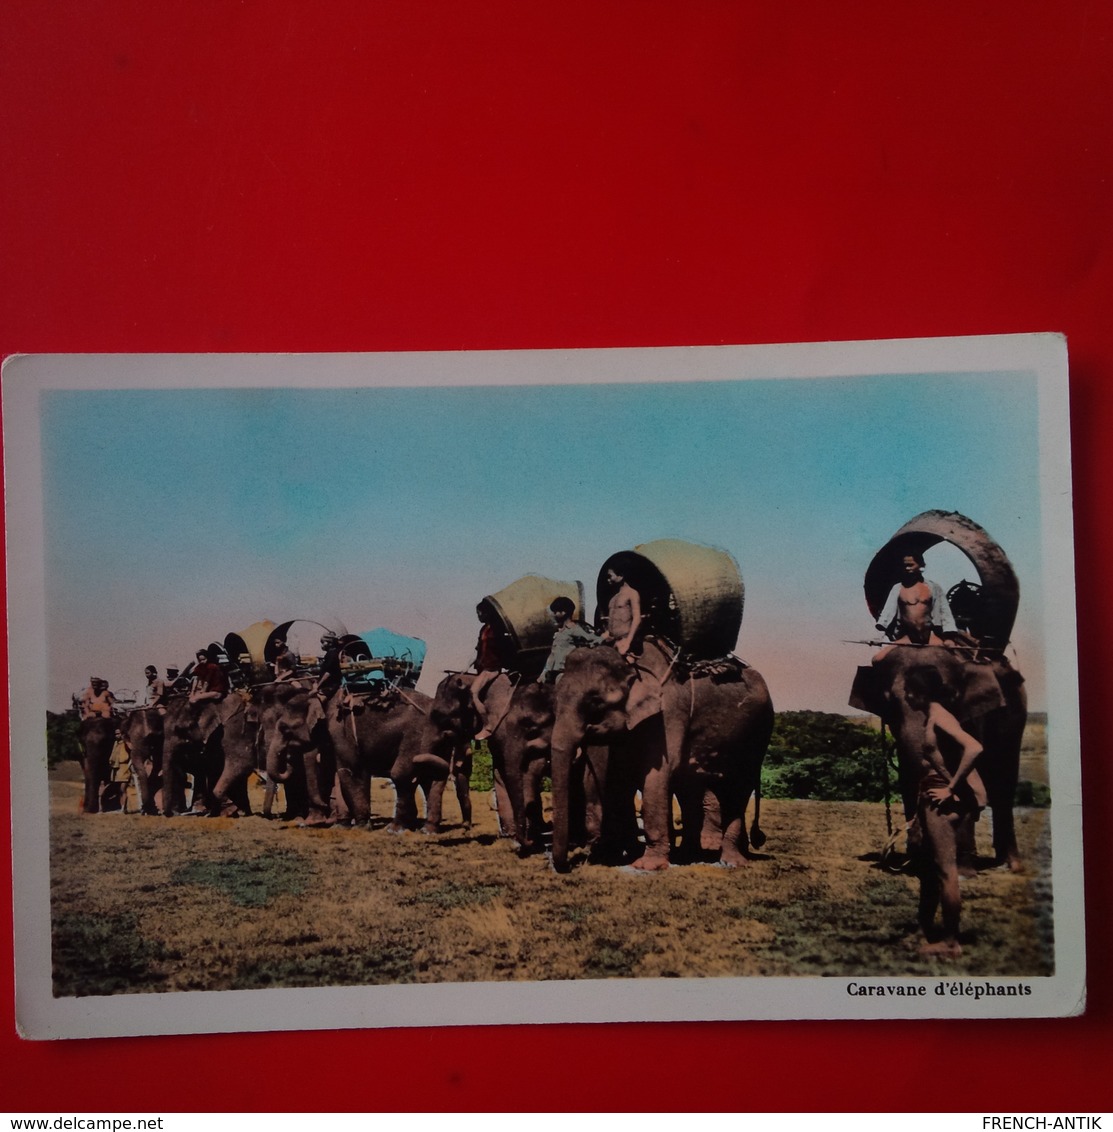 CARAVANE D ELEPHANTS - Elefantes